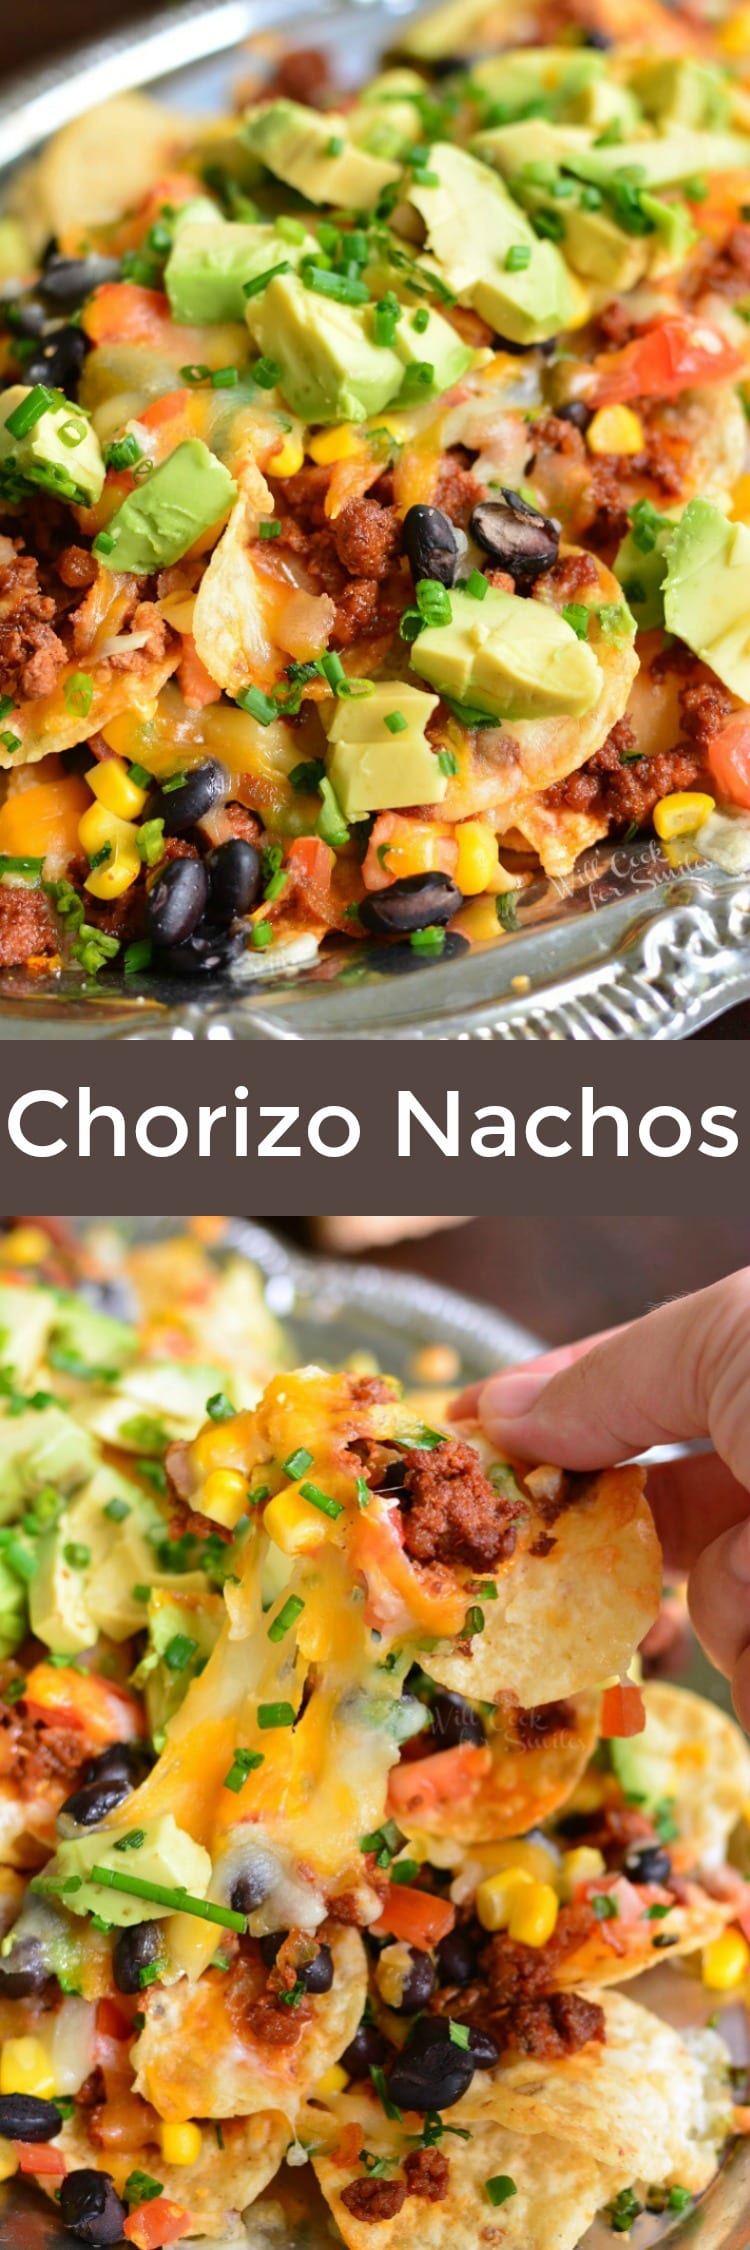 Chorizo Nachos! These baked Chorizo Nachos are made with spicy chorizo sausage and a combination of corn, beans, jalapenos and tomatoes. #chorizonachos #chorizorecipe #nachos